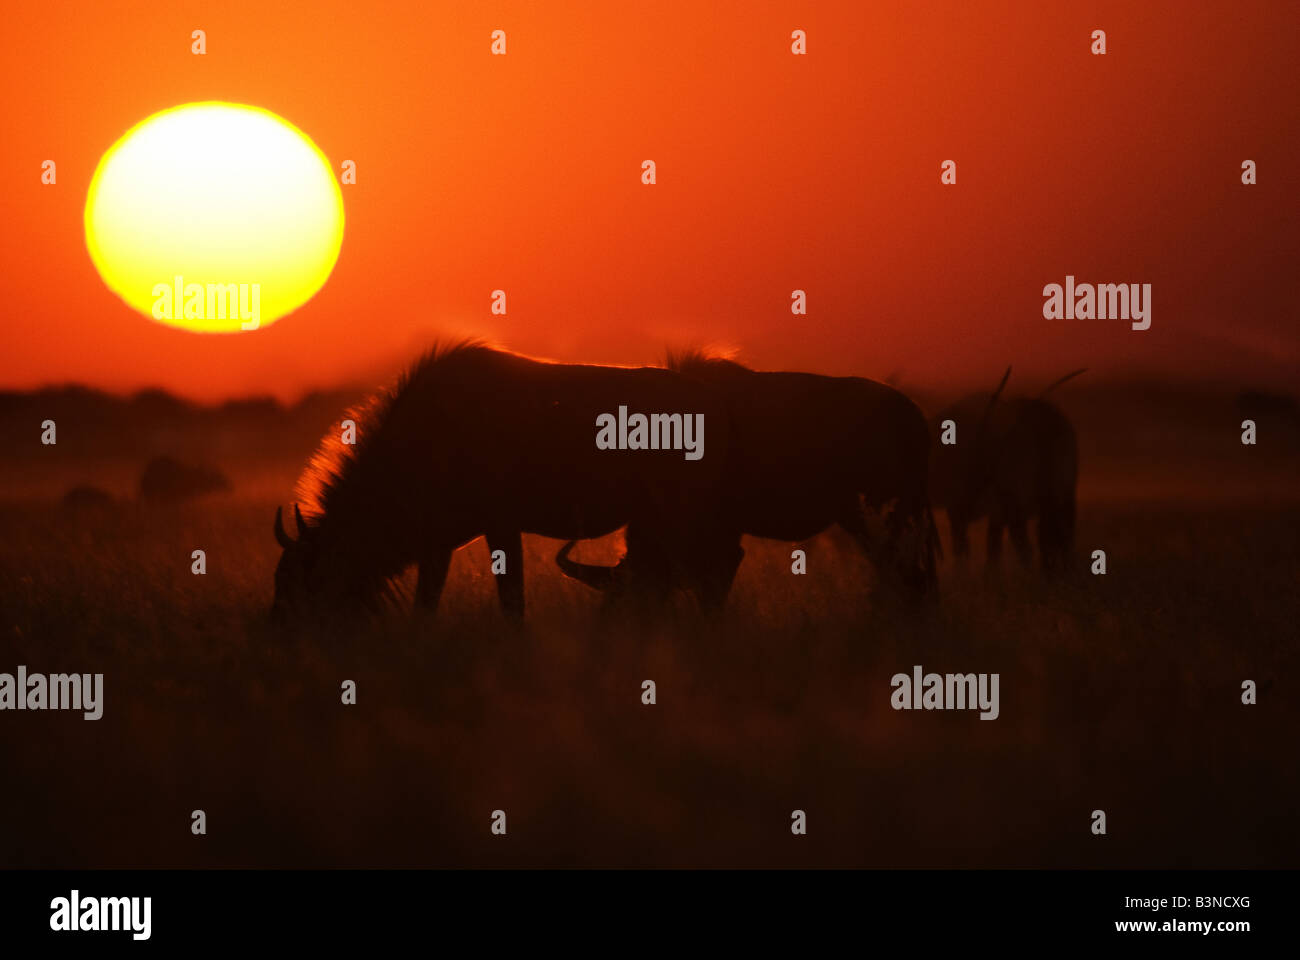 Gnu silhouette against sunset Stock Photo - Alamy